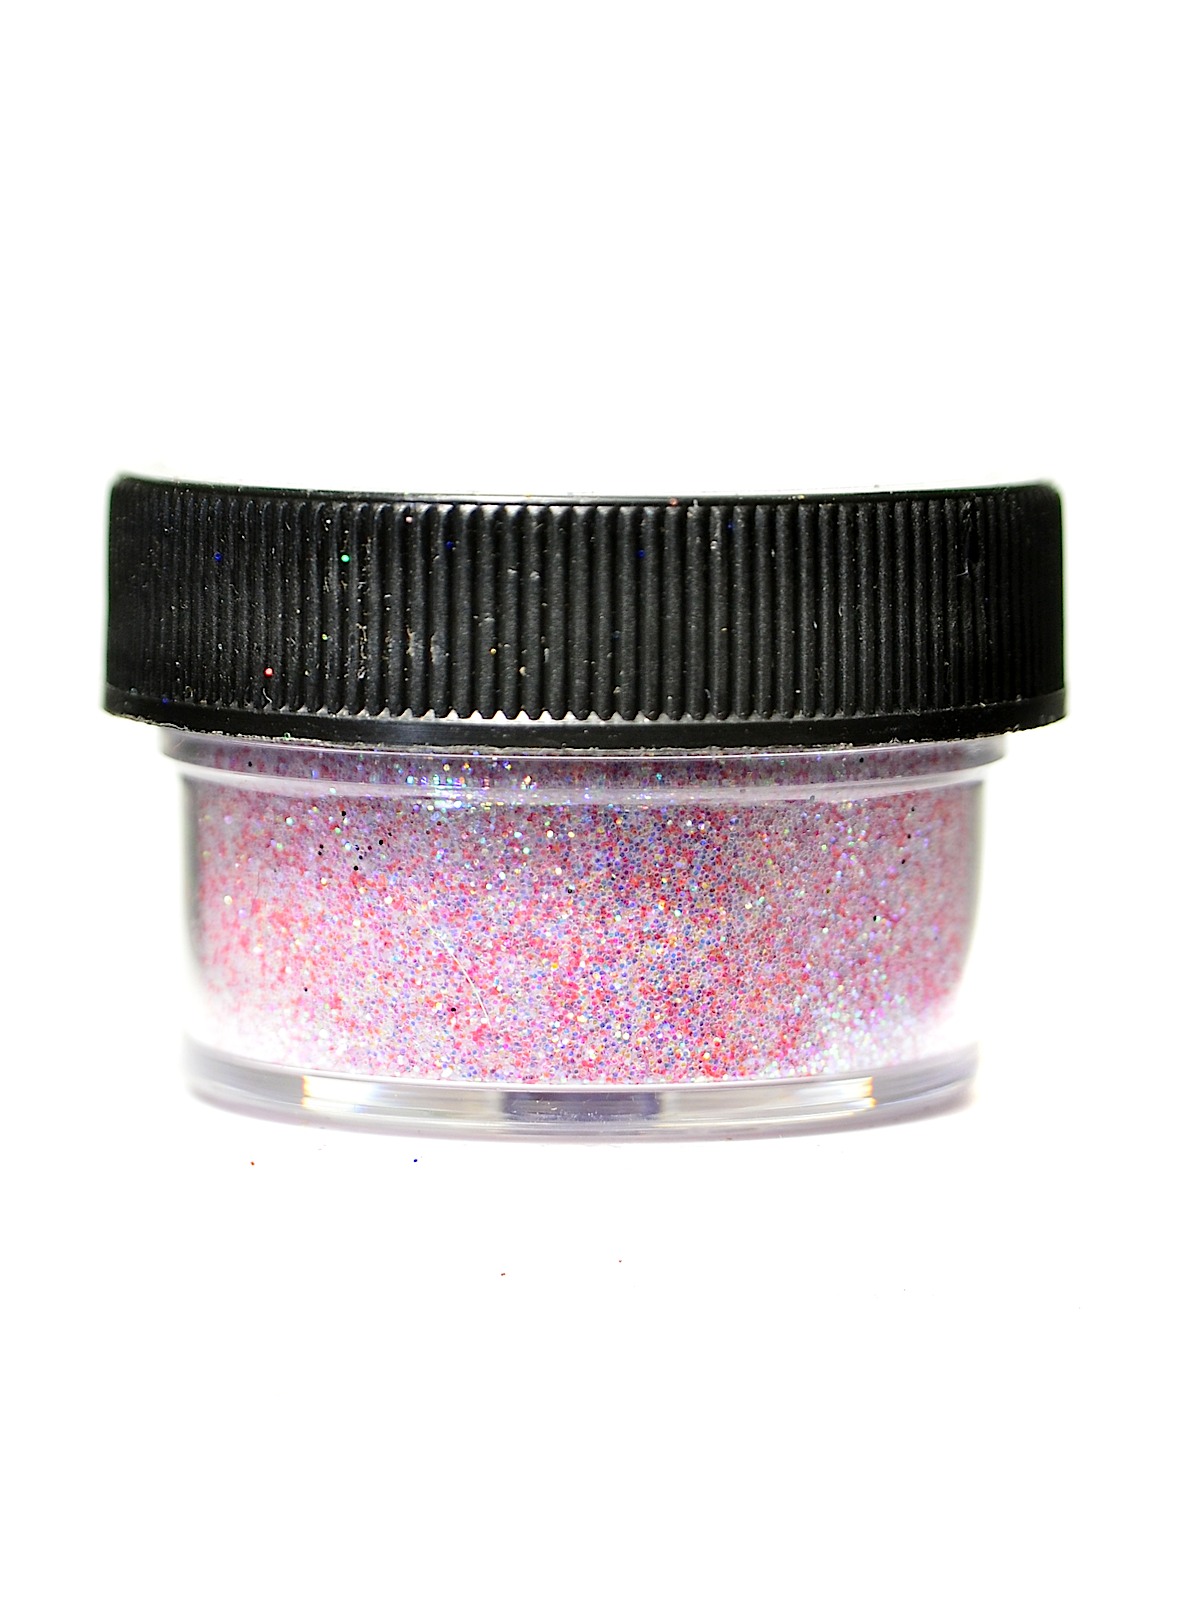 Ultrafine Transparent Glitter Wisteria 1 2 Oz. Jar